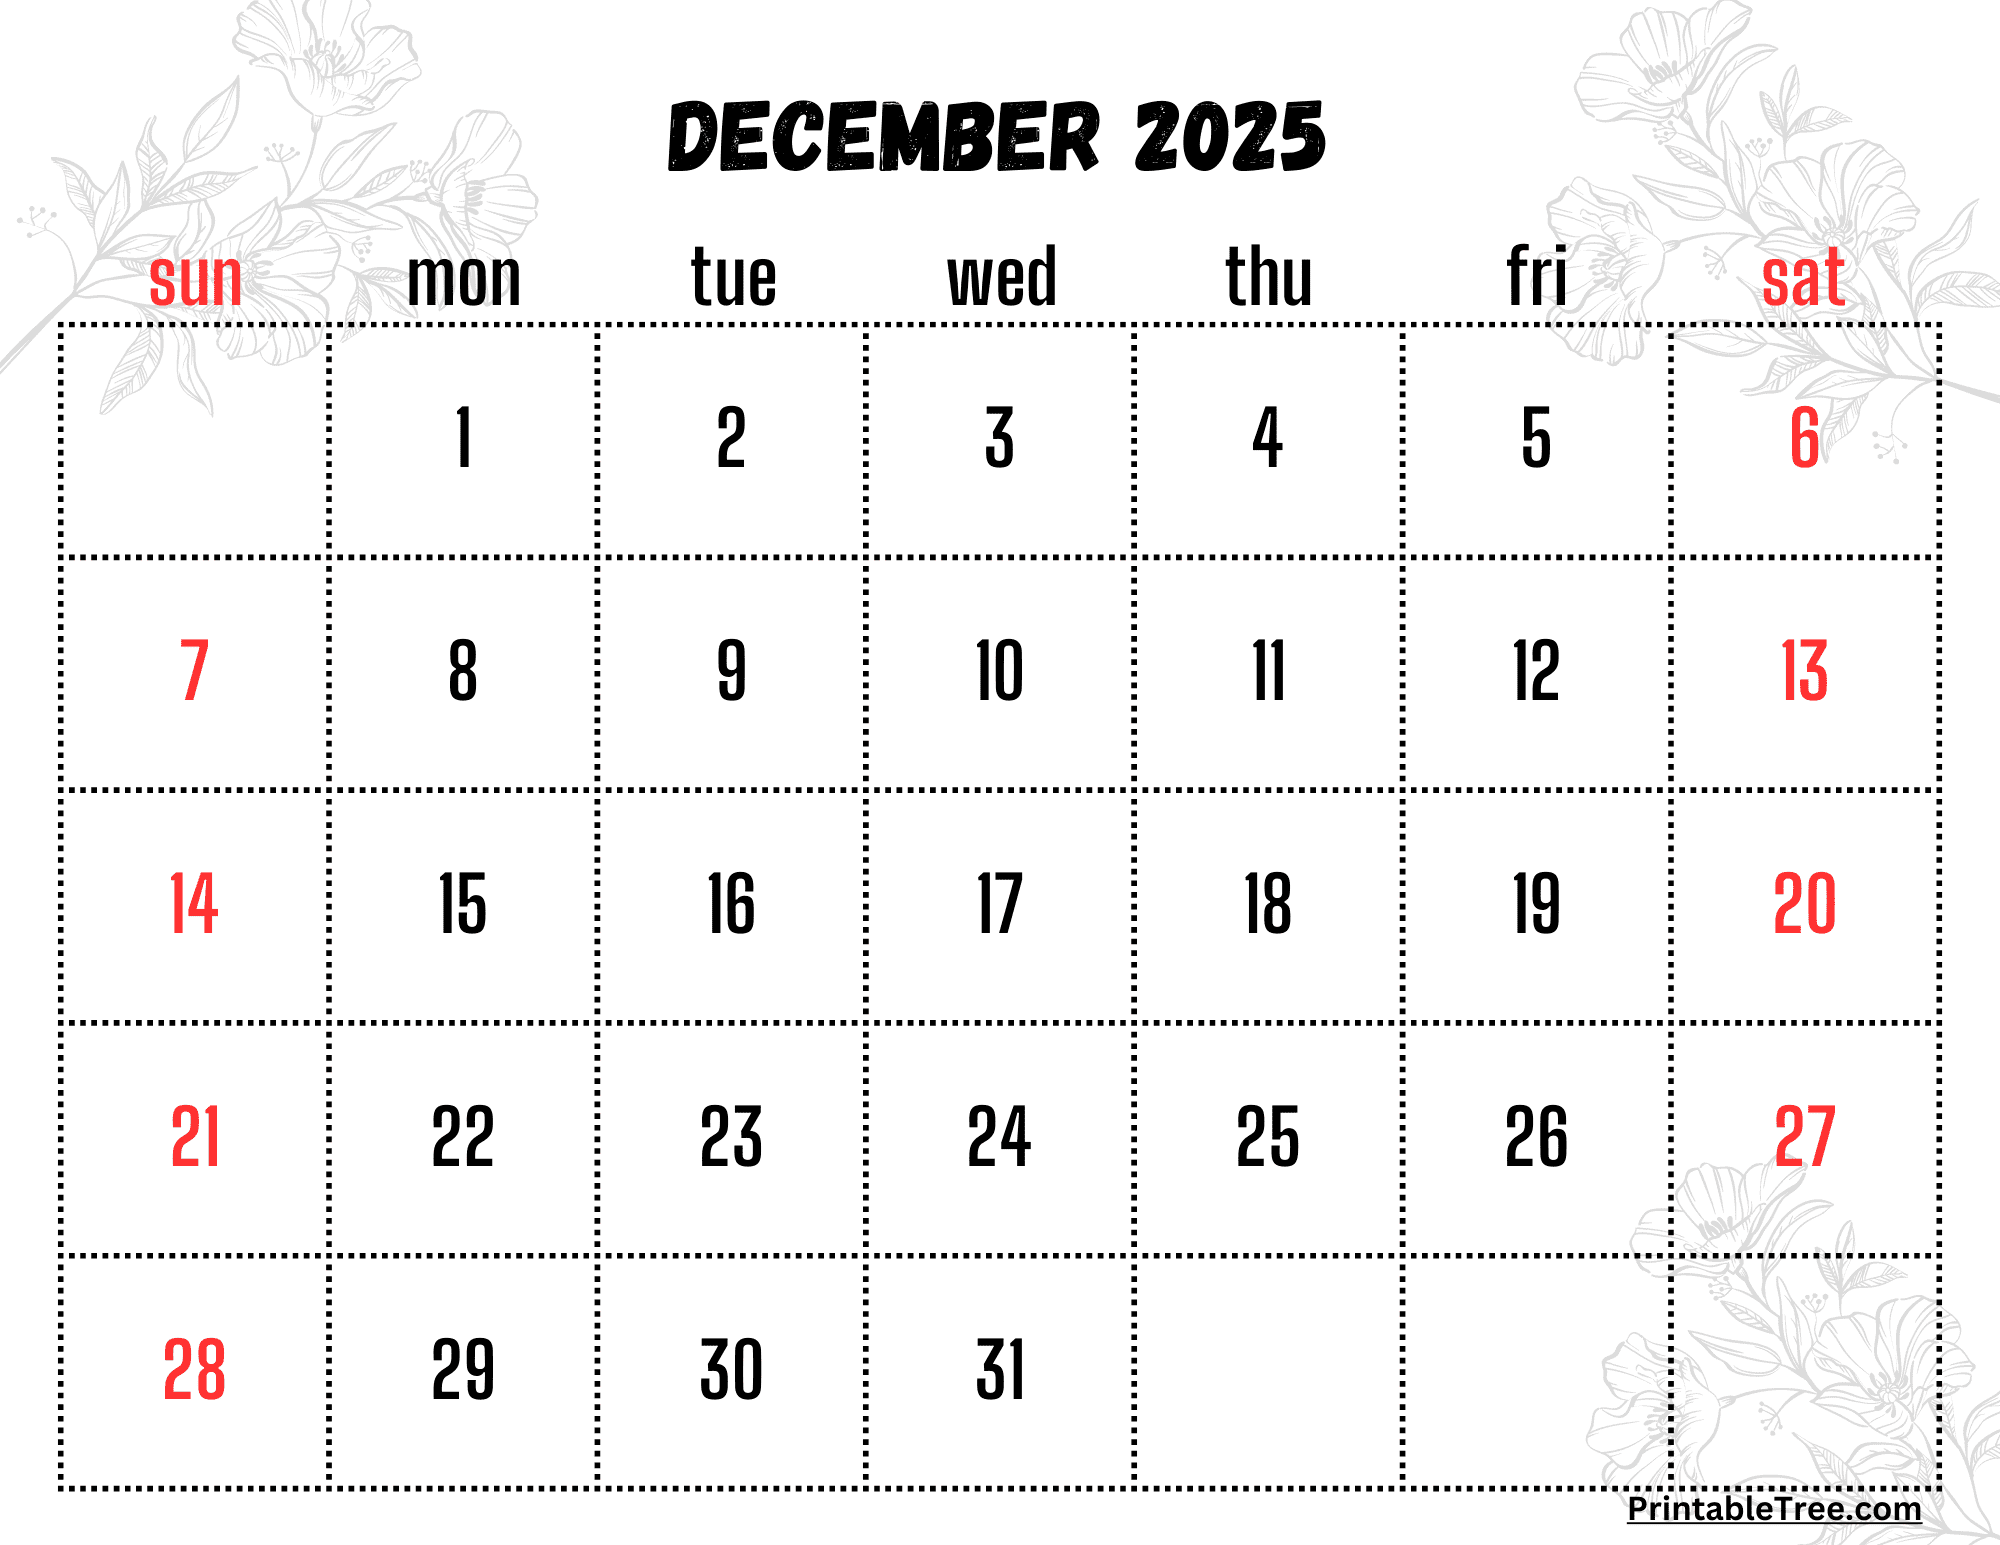 December calendar printable pdf template with holidays